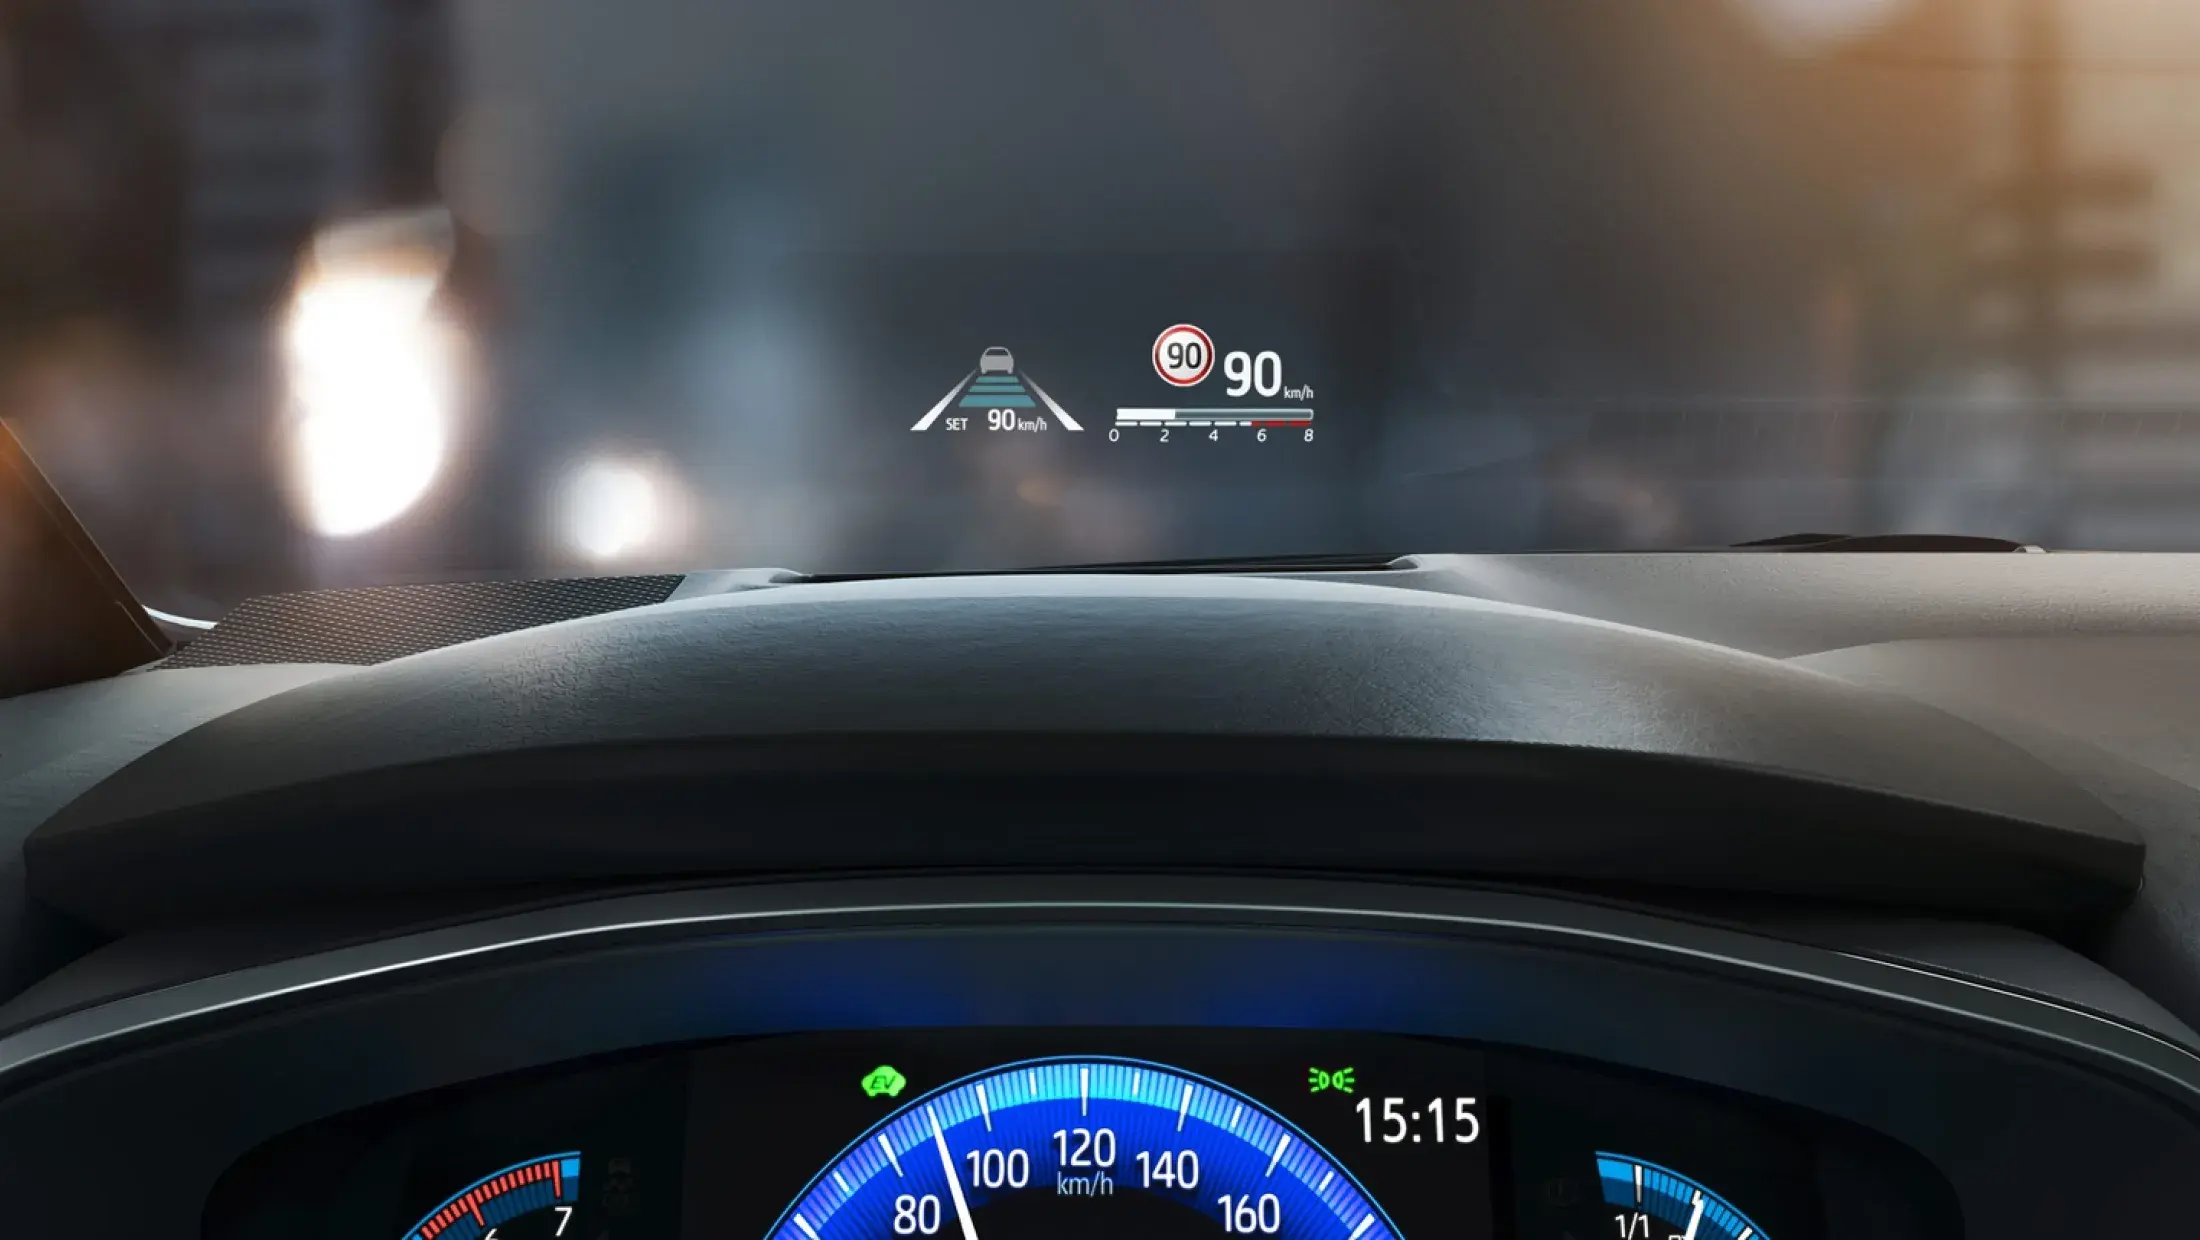 Corolla Sedan interieur headsup display